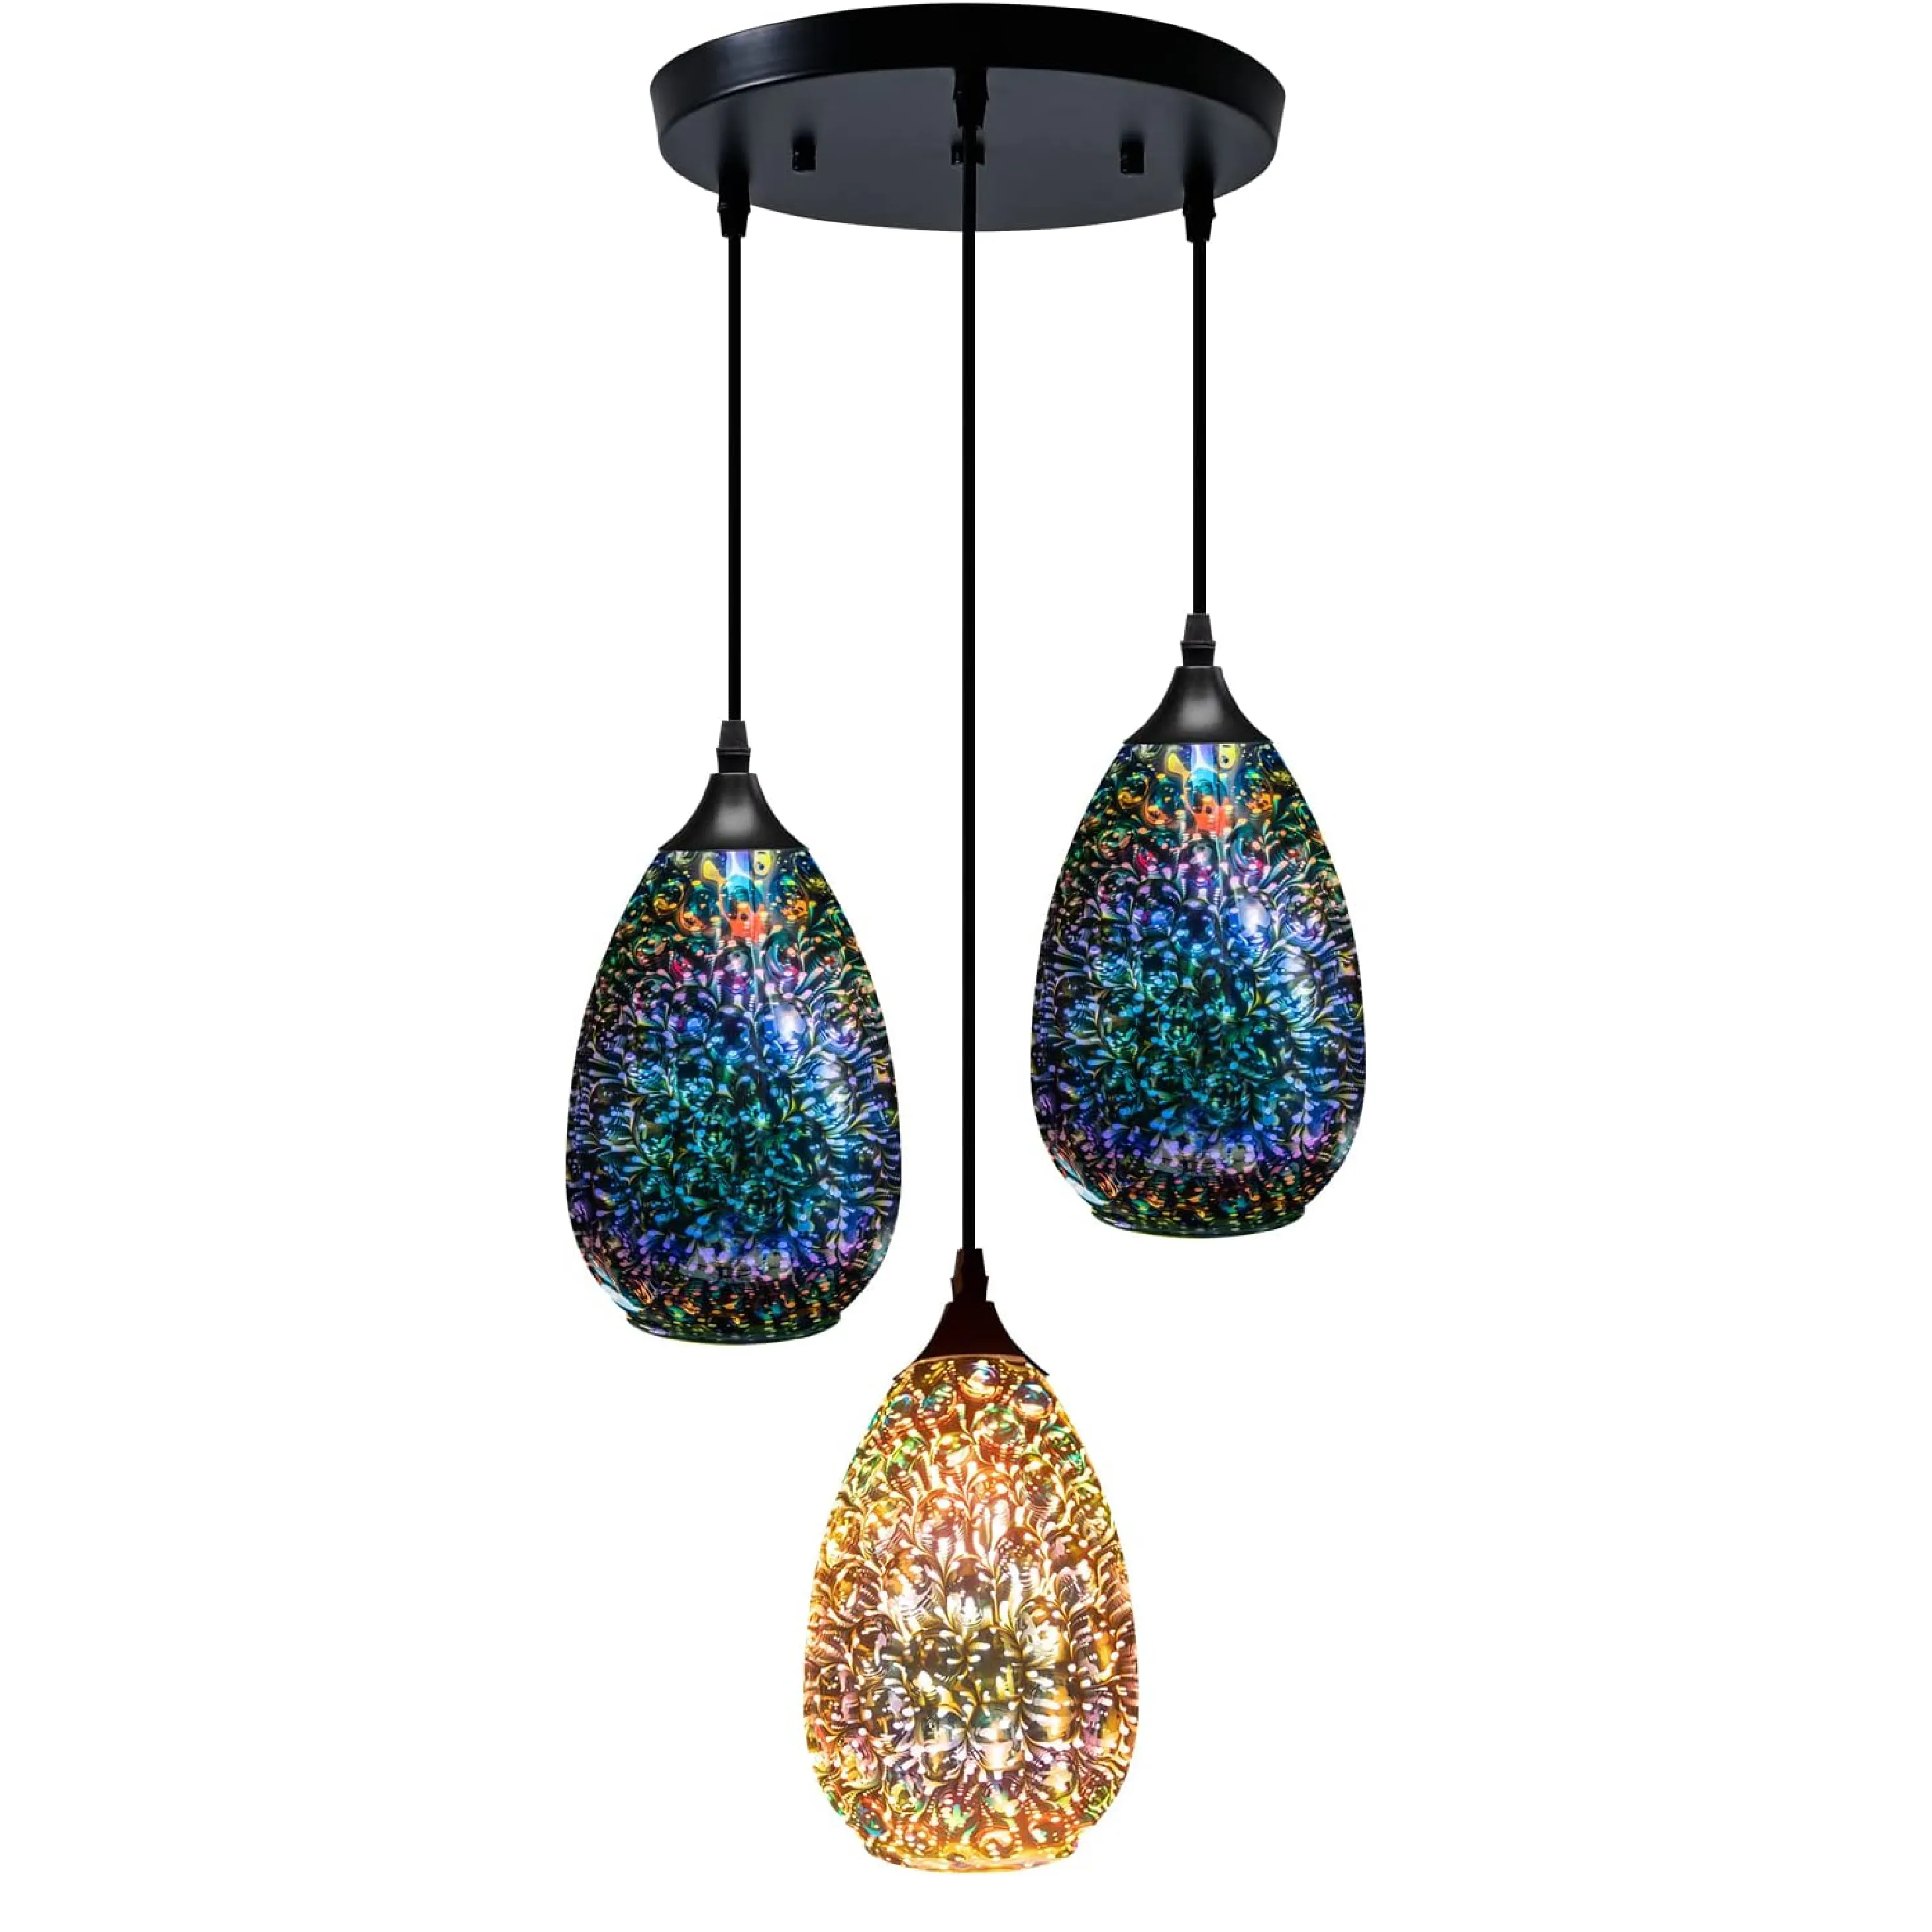 3 hanging kitchen lights Modern glass pendant light over sink lighting fixtures